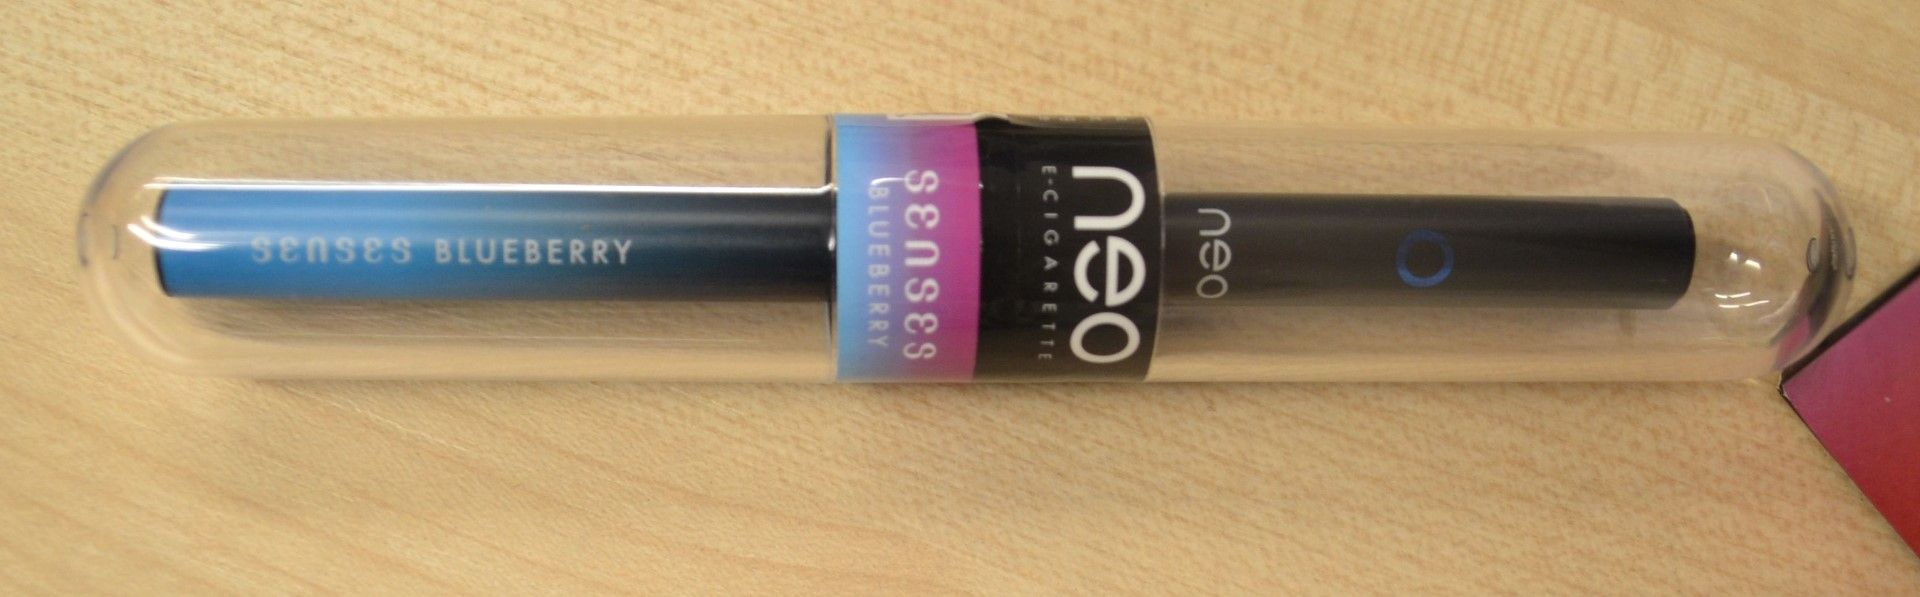 60 x Neo E-Cigarettes Senses Shisha Blueberry Disposable Electronic Cigarettes - New & Sealed Stock - Image 5 of 6